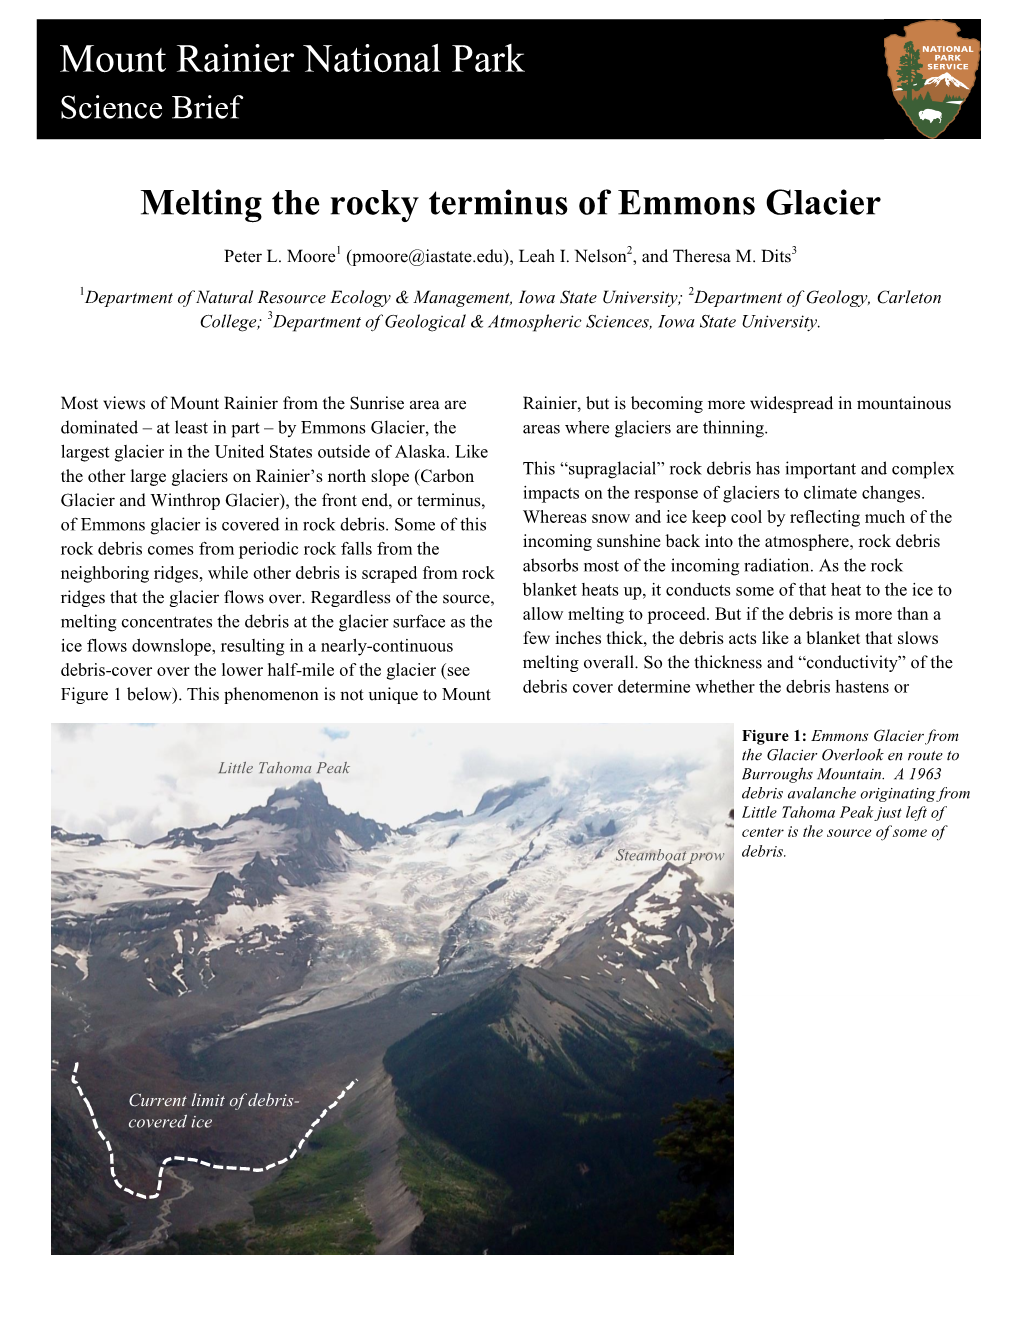 Mount Rainier National Park Science Brief